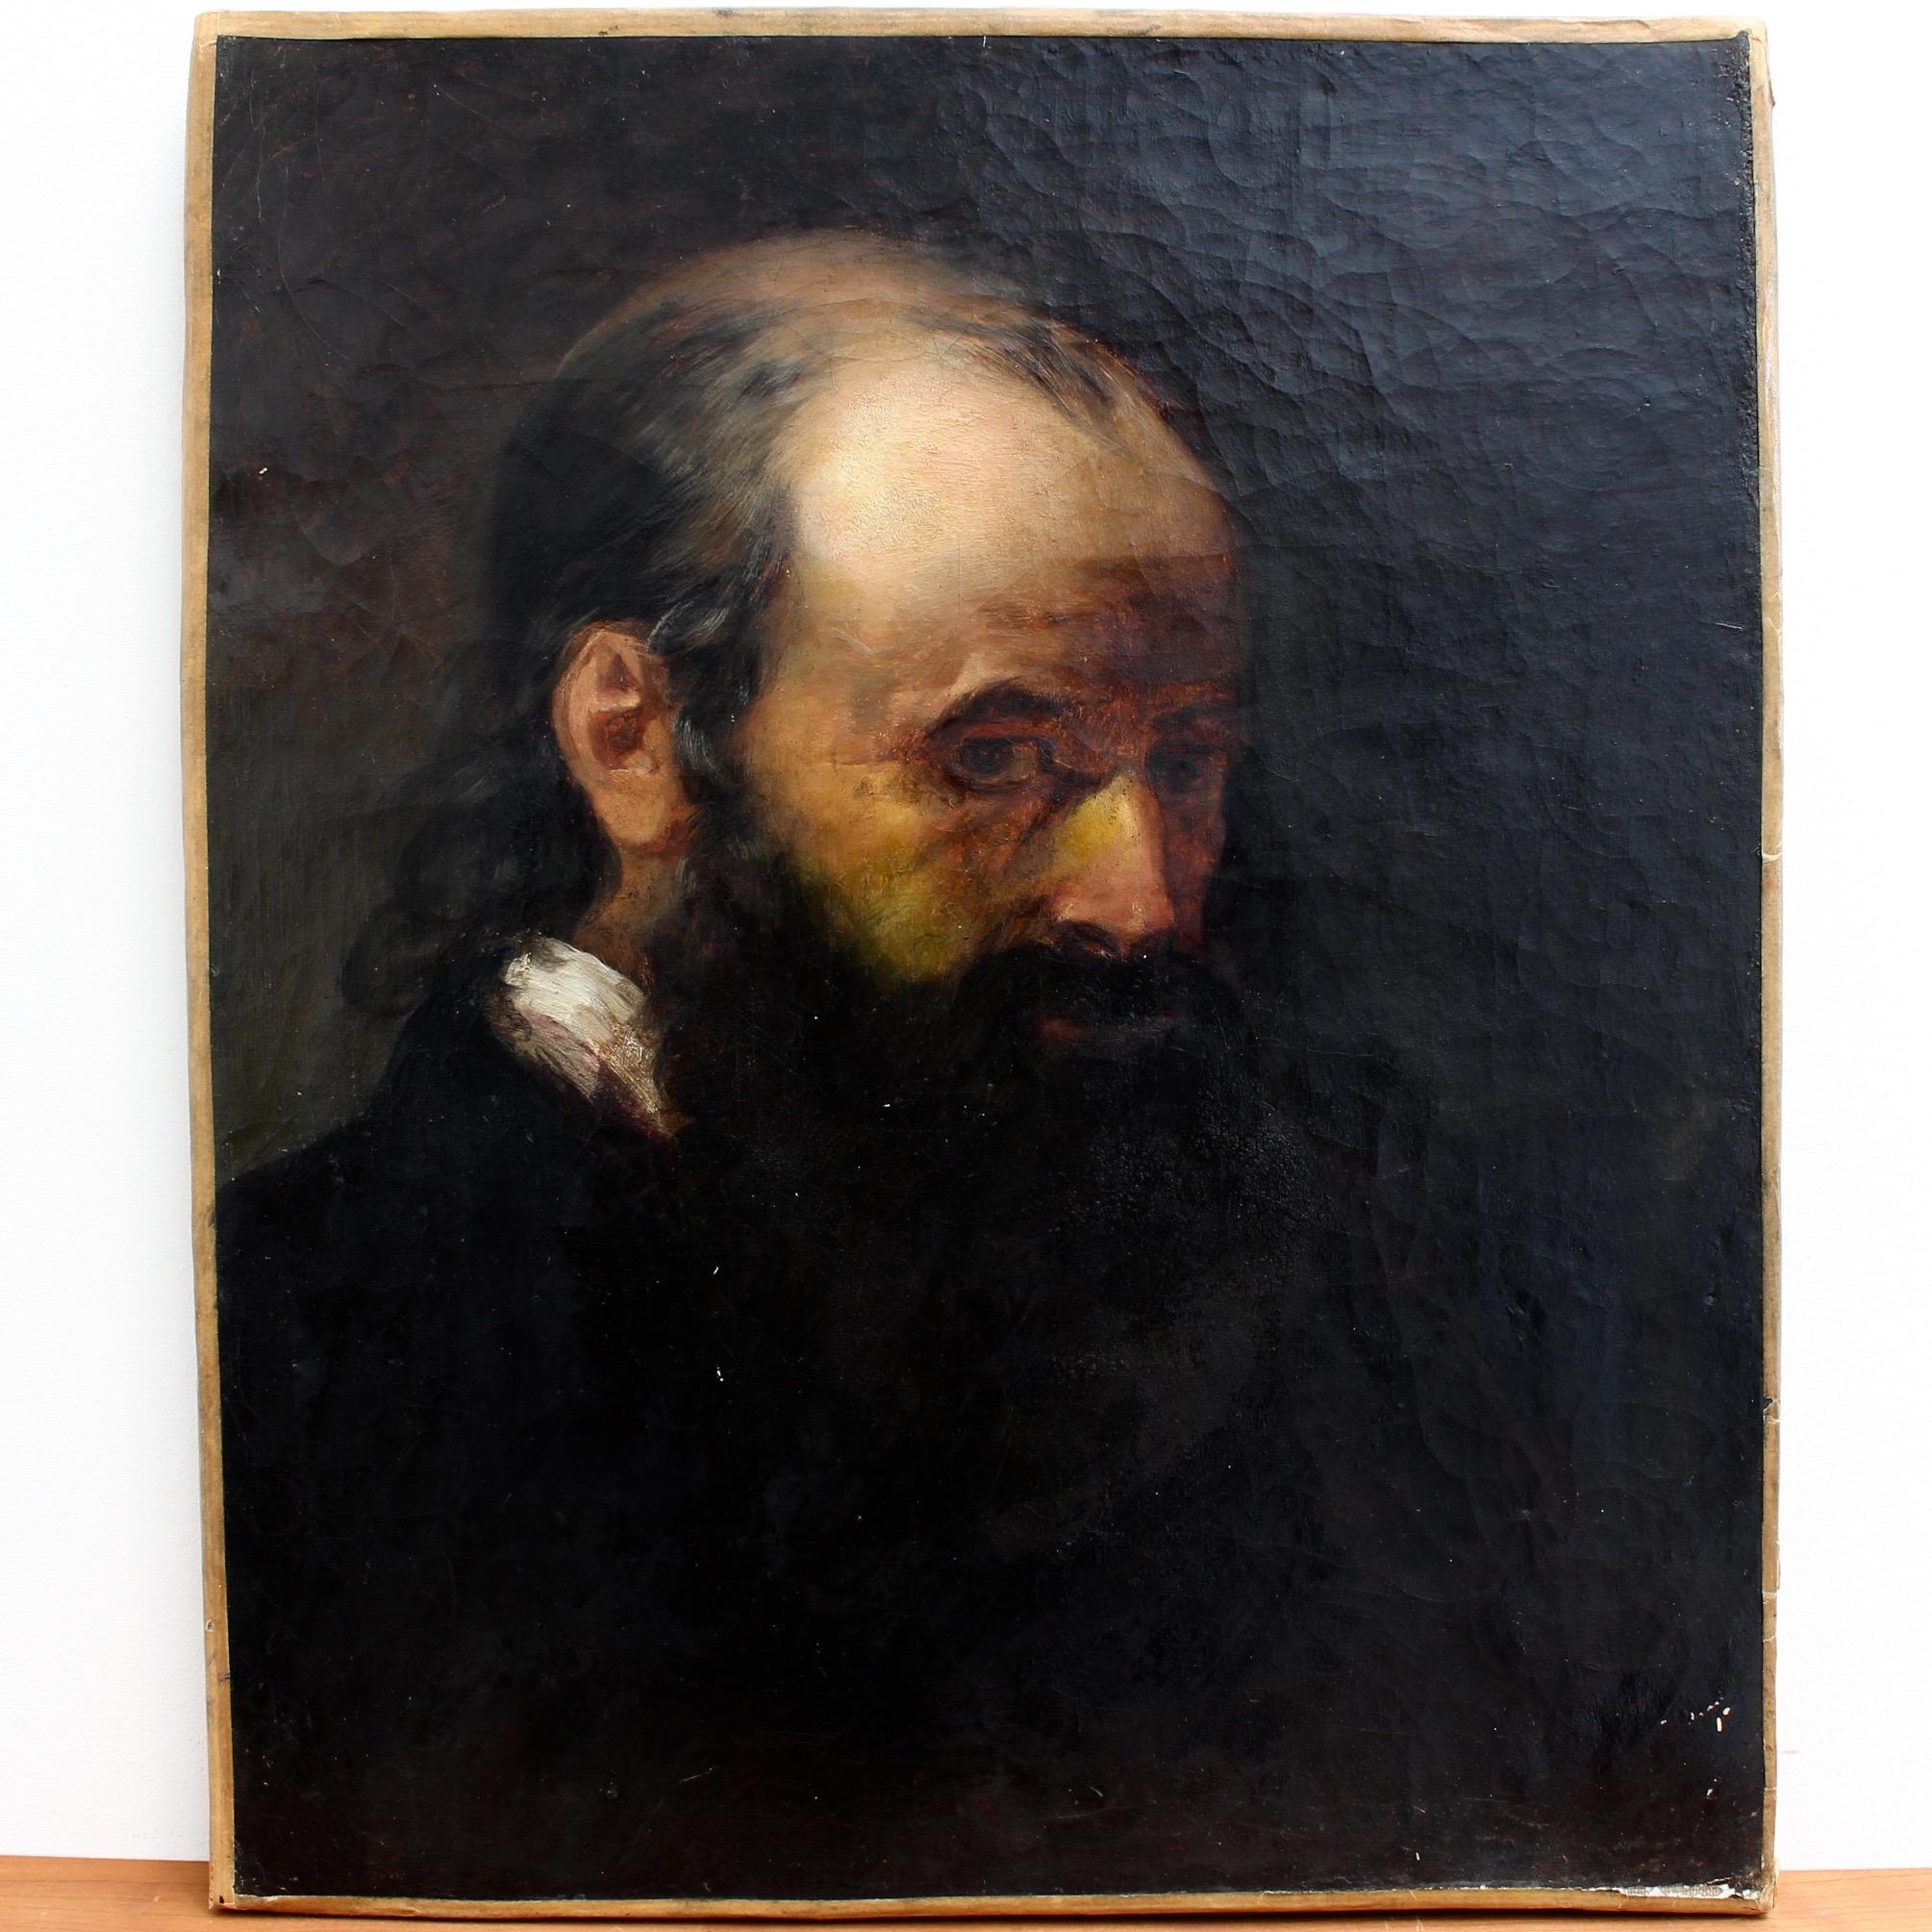 19th century portrait man